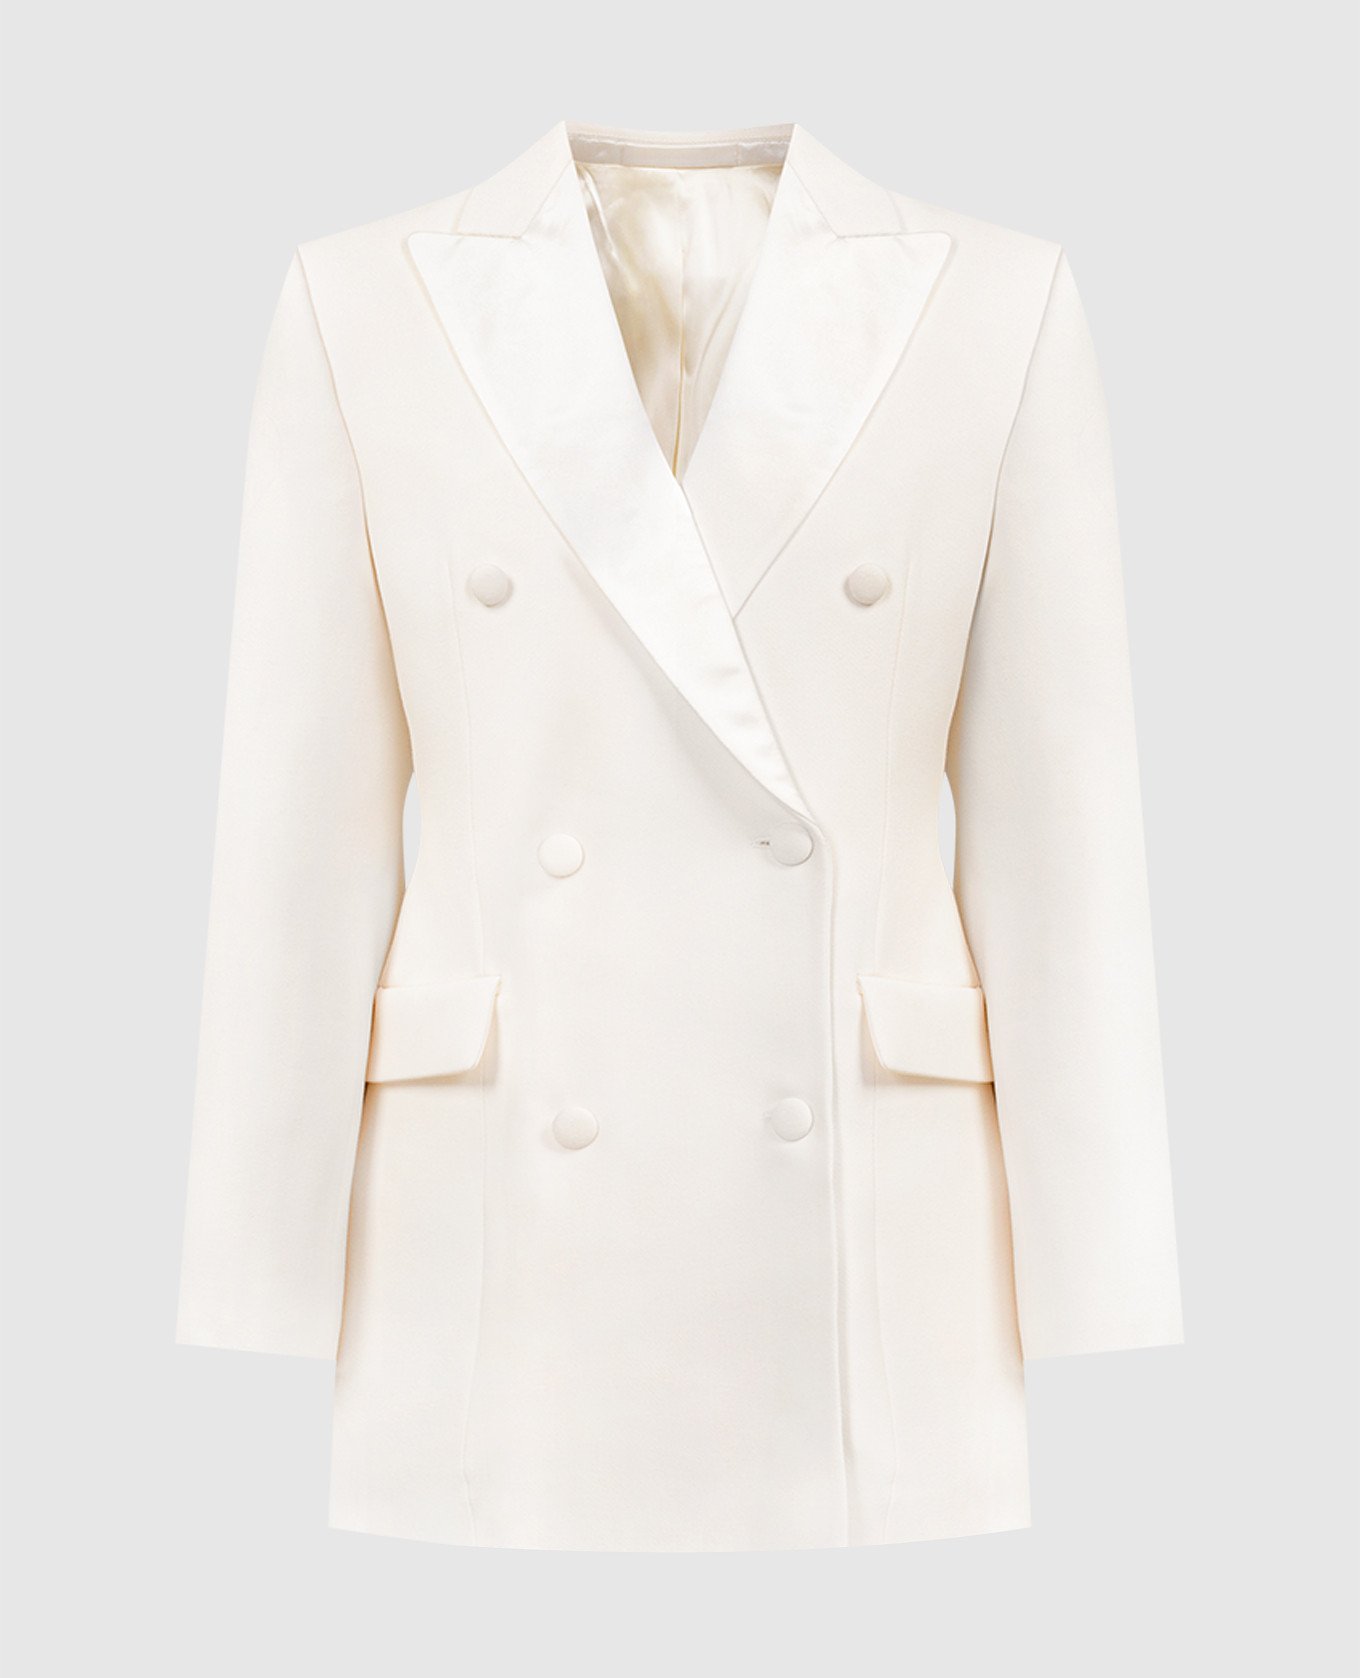 White dress-jacket made of wool